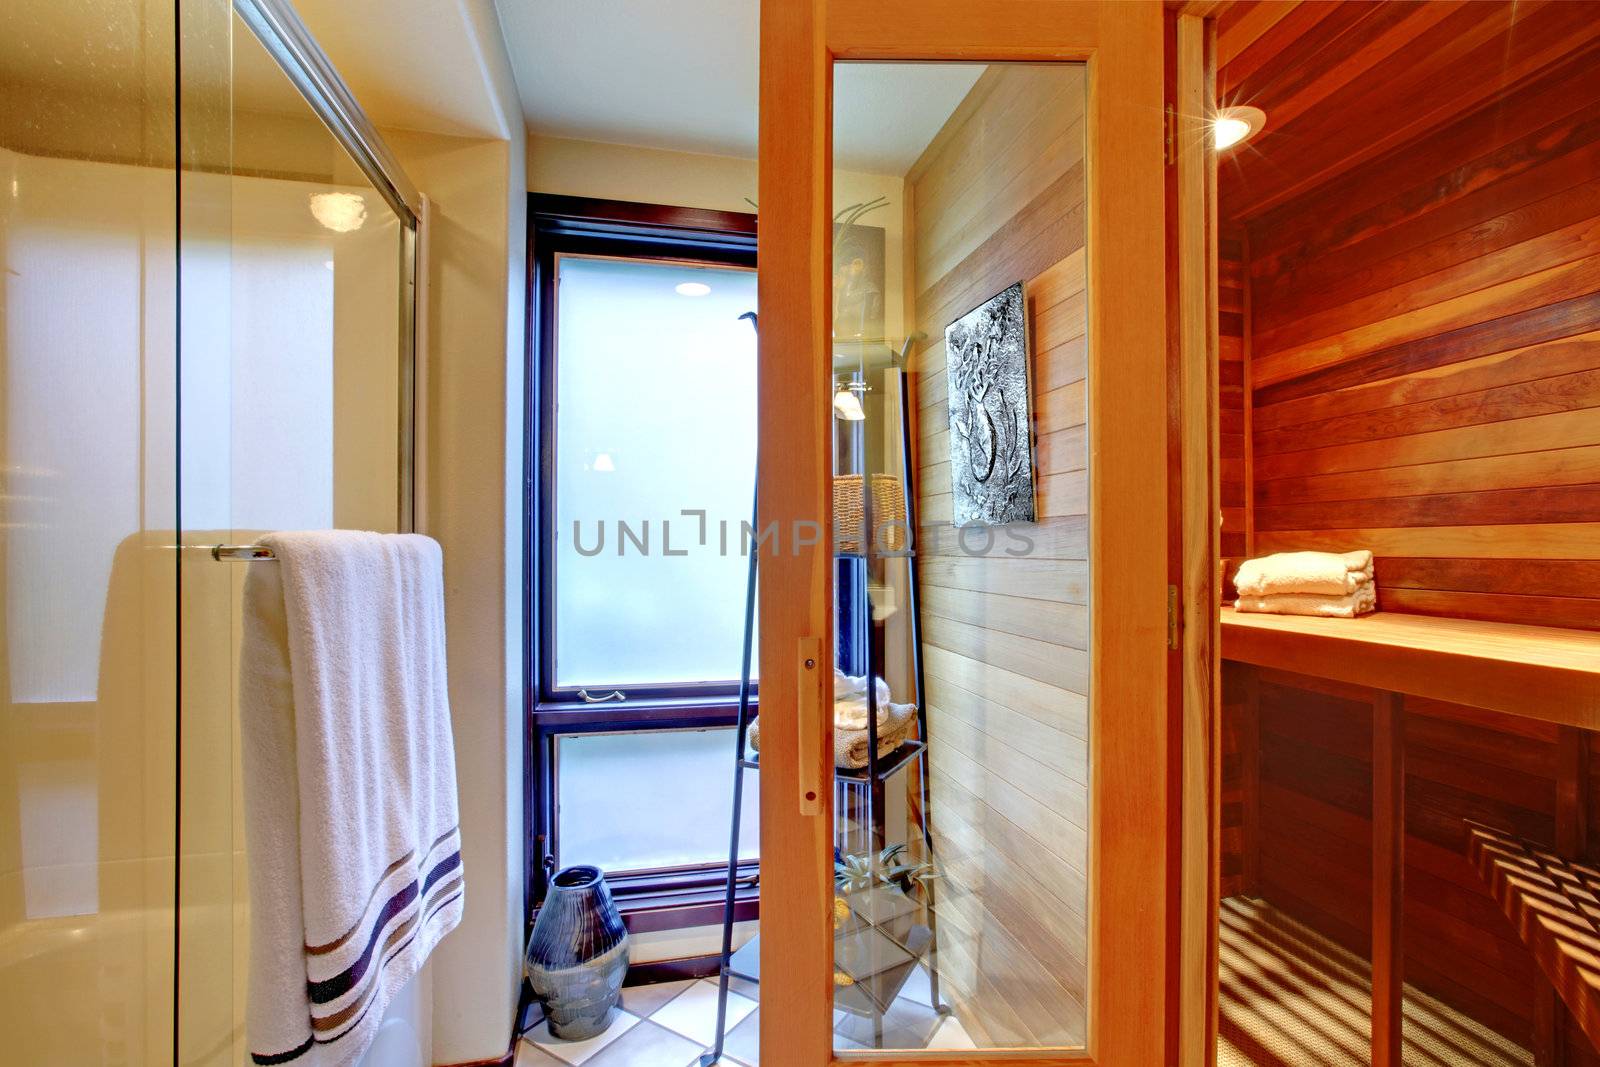 Home sauna interior with shower and window.